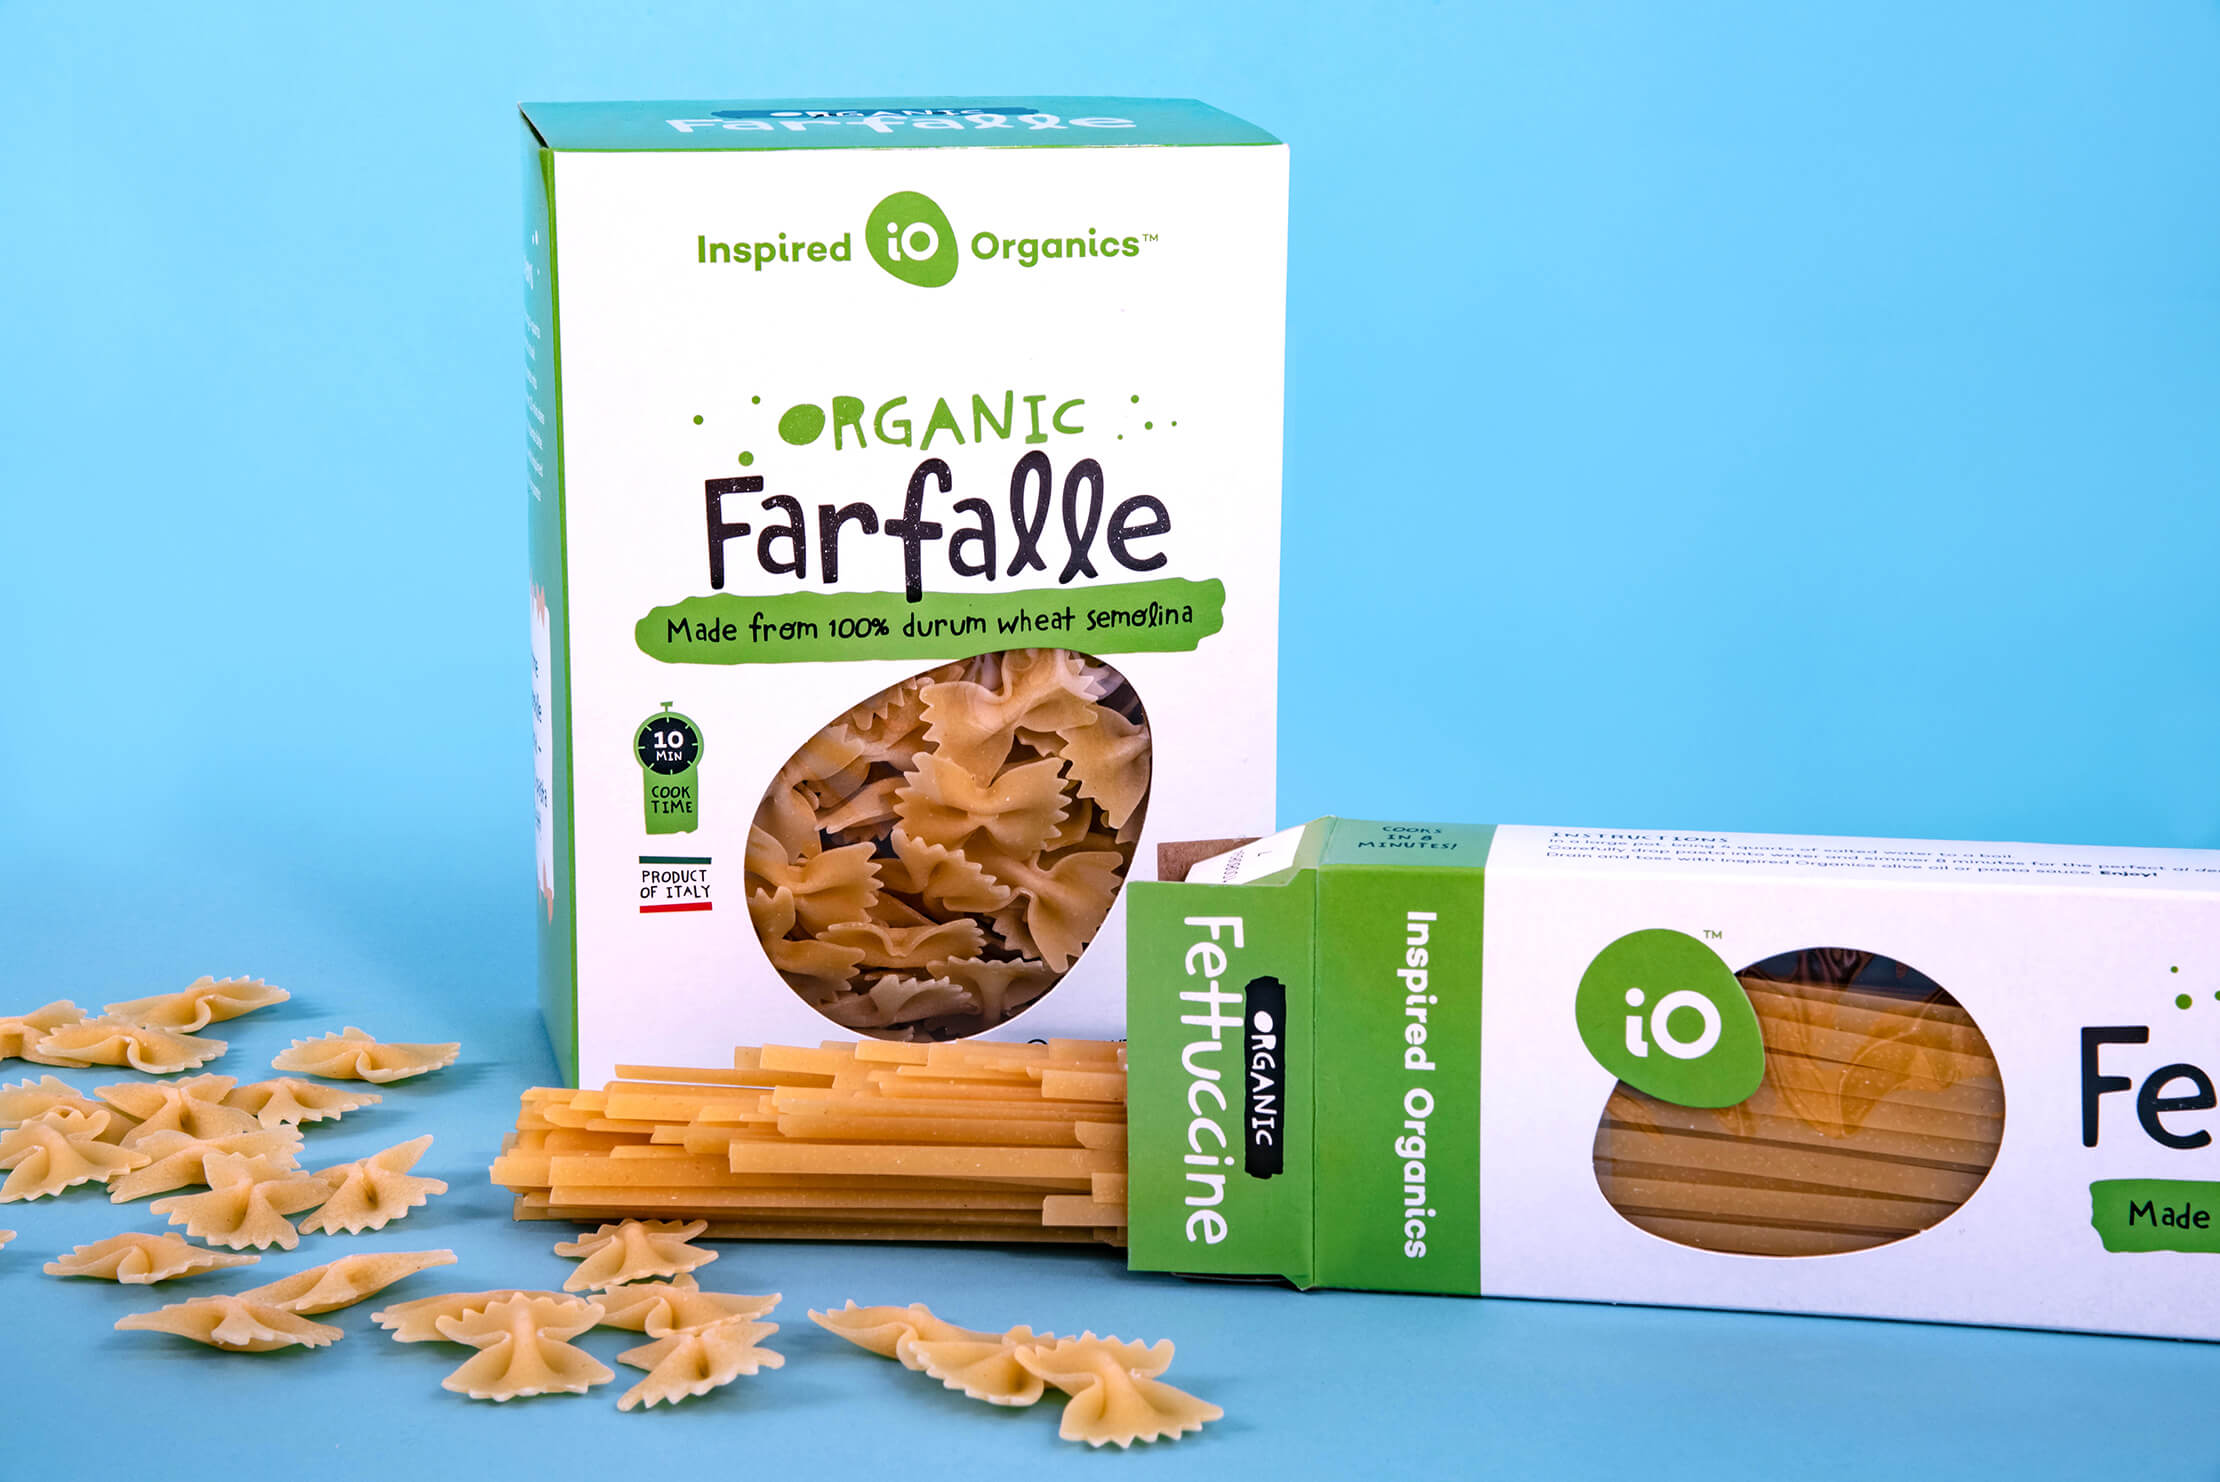 Inspired Organics Farfalle Fettuccine Pasta Packaging